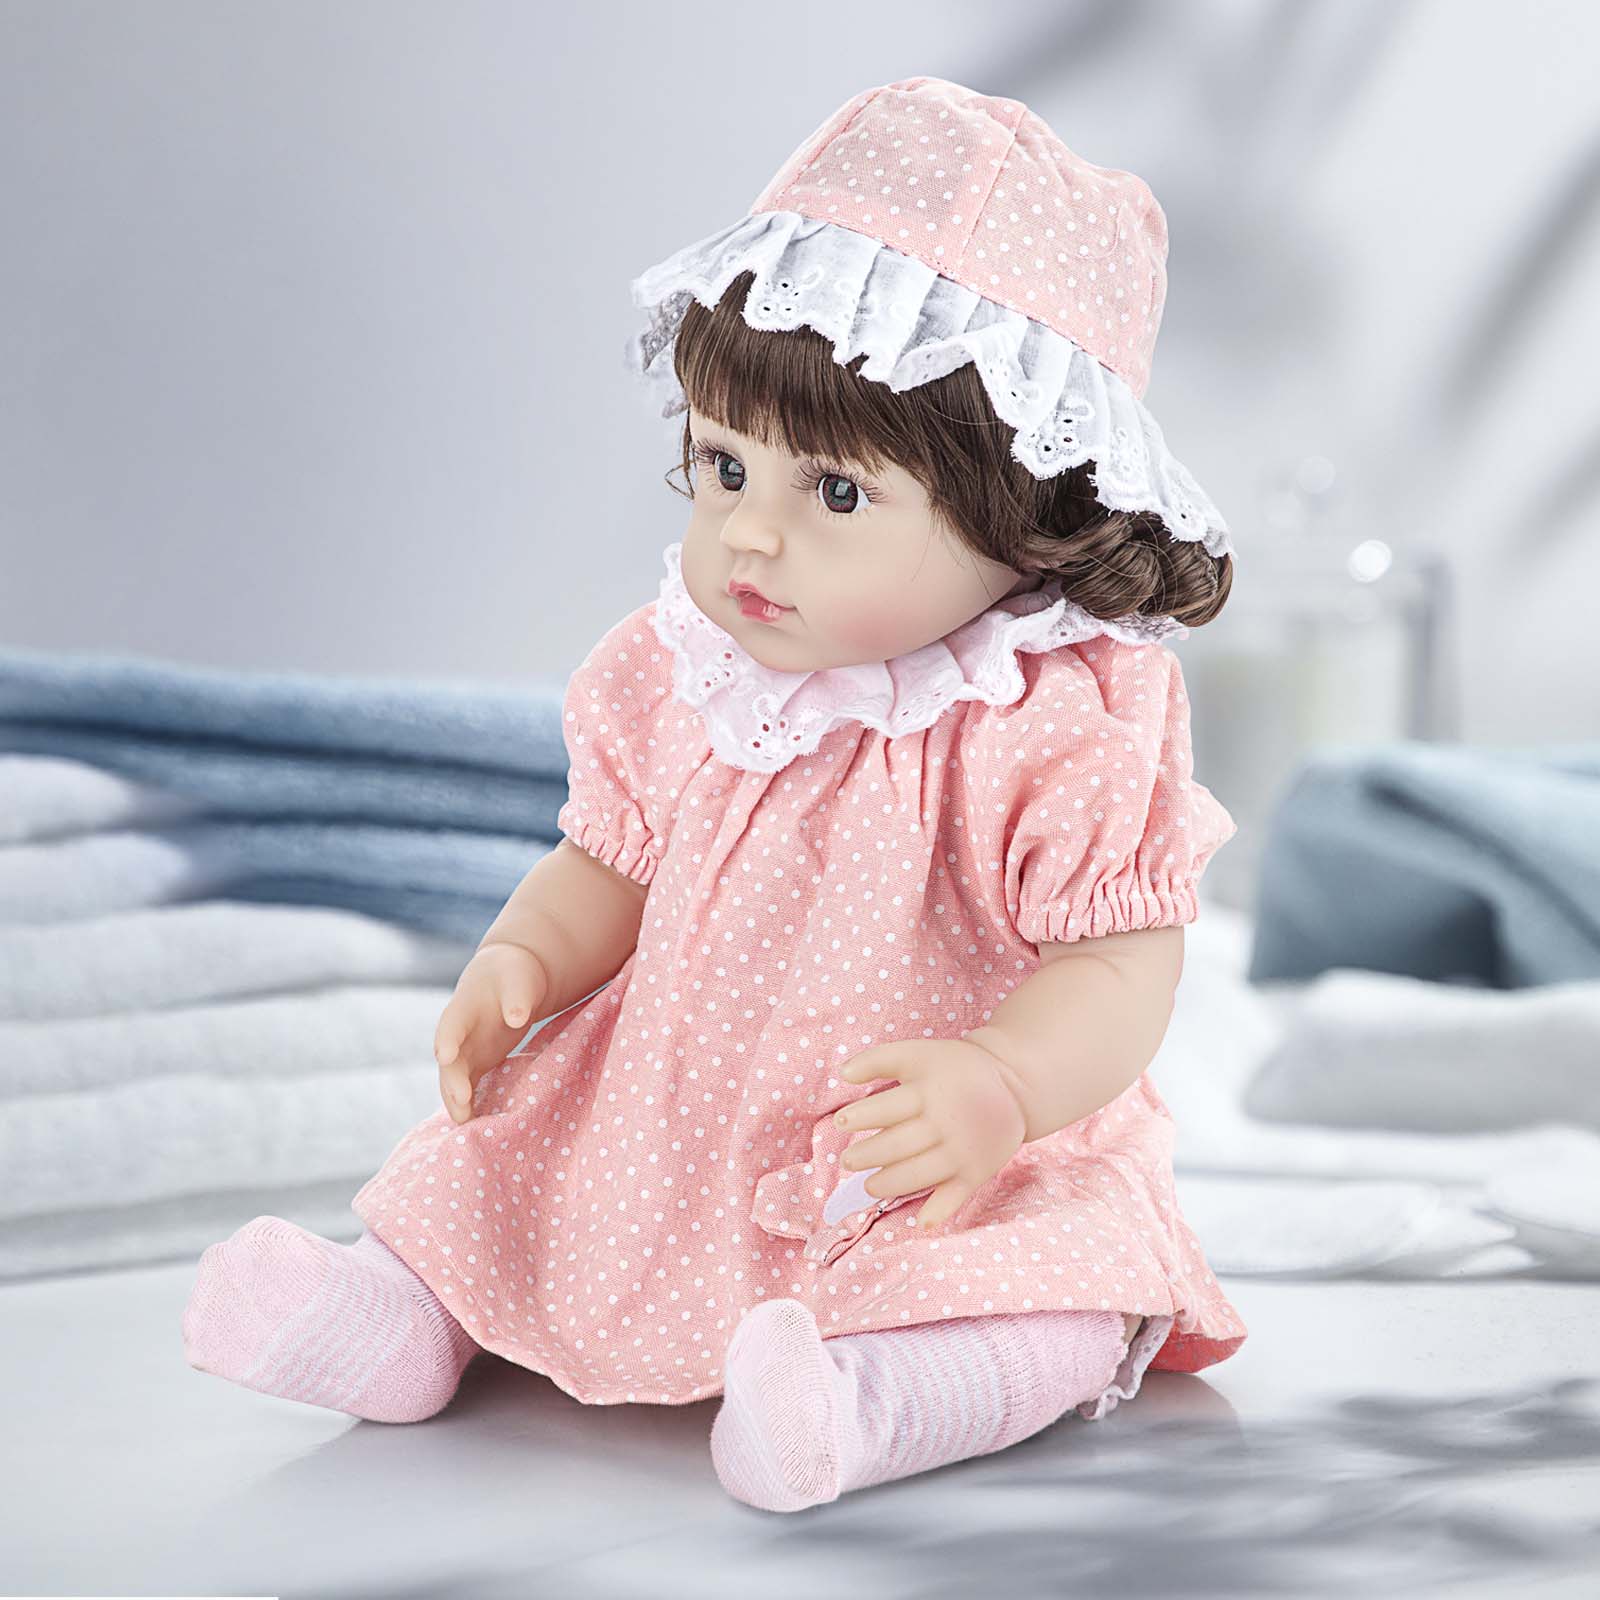 18" 46cm Lifelike Reborn Baby Doll Girl Full Body Realistic Silicone Babies Girl Gift Waterproof